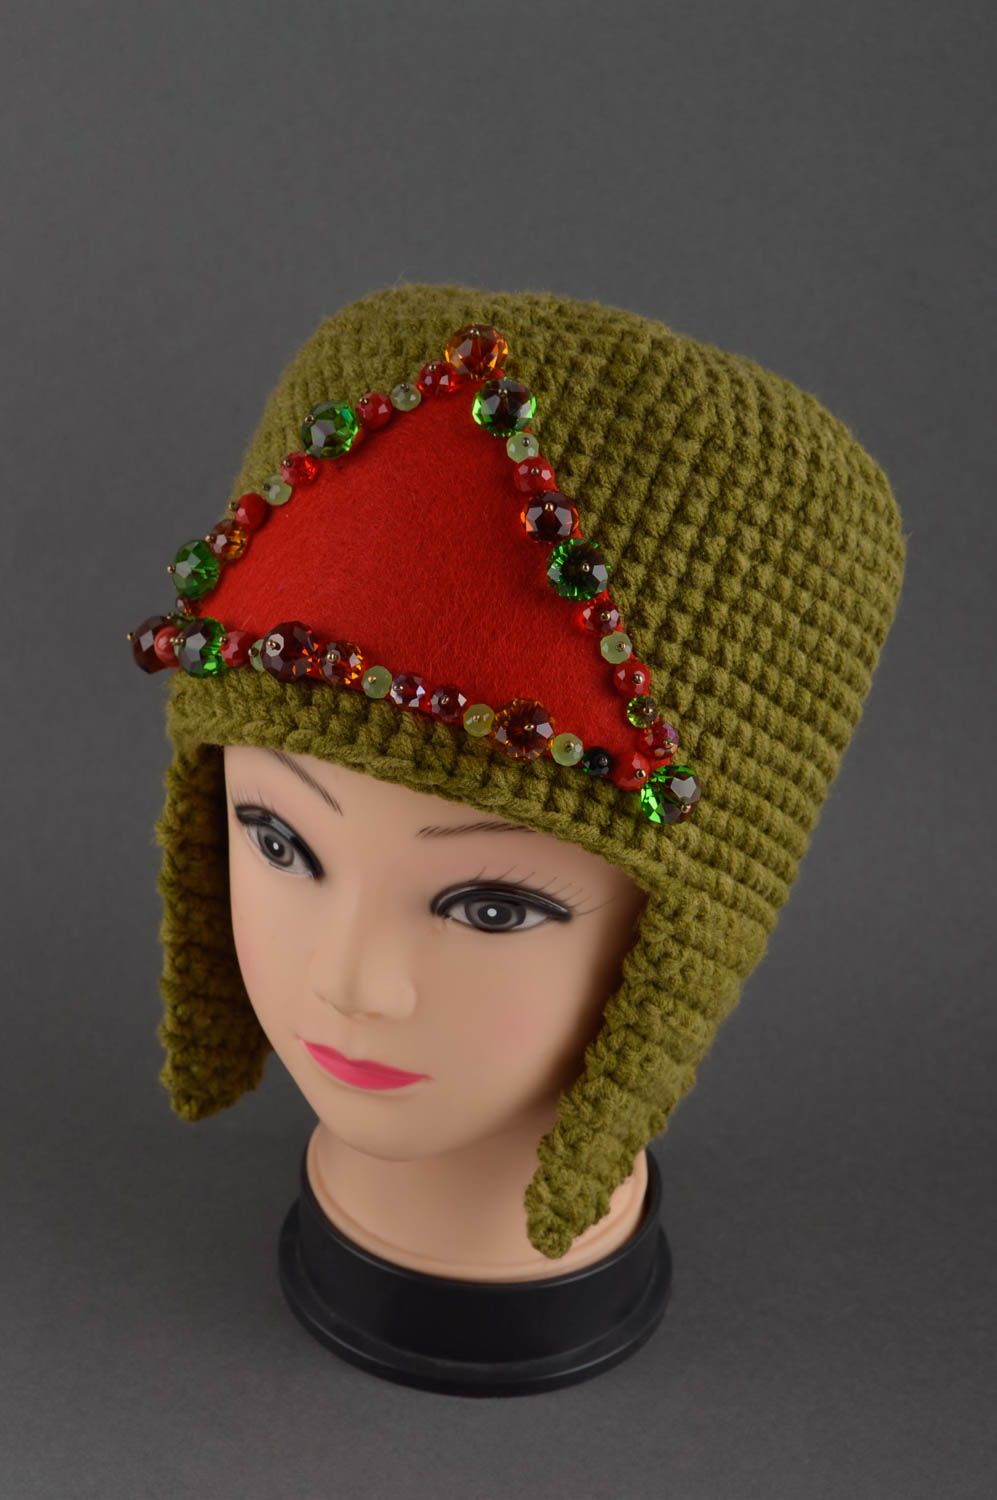 Handmade hat warm baby hat winter hat for baby unusual headwear gift ideas photo 1